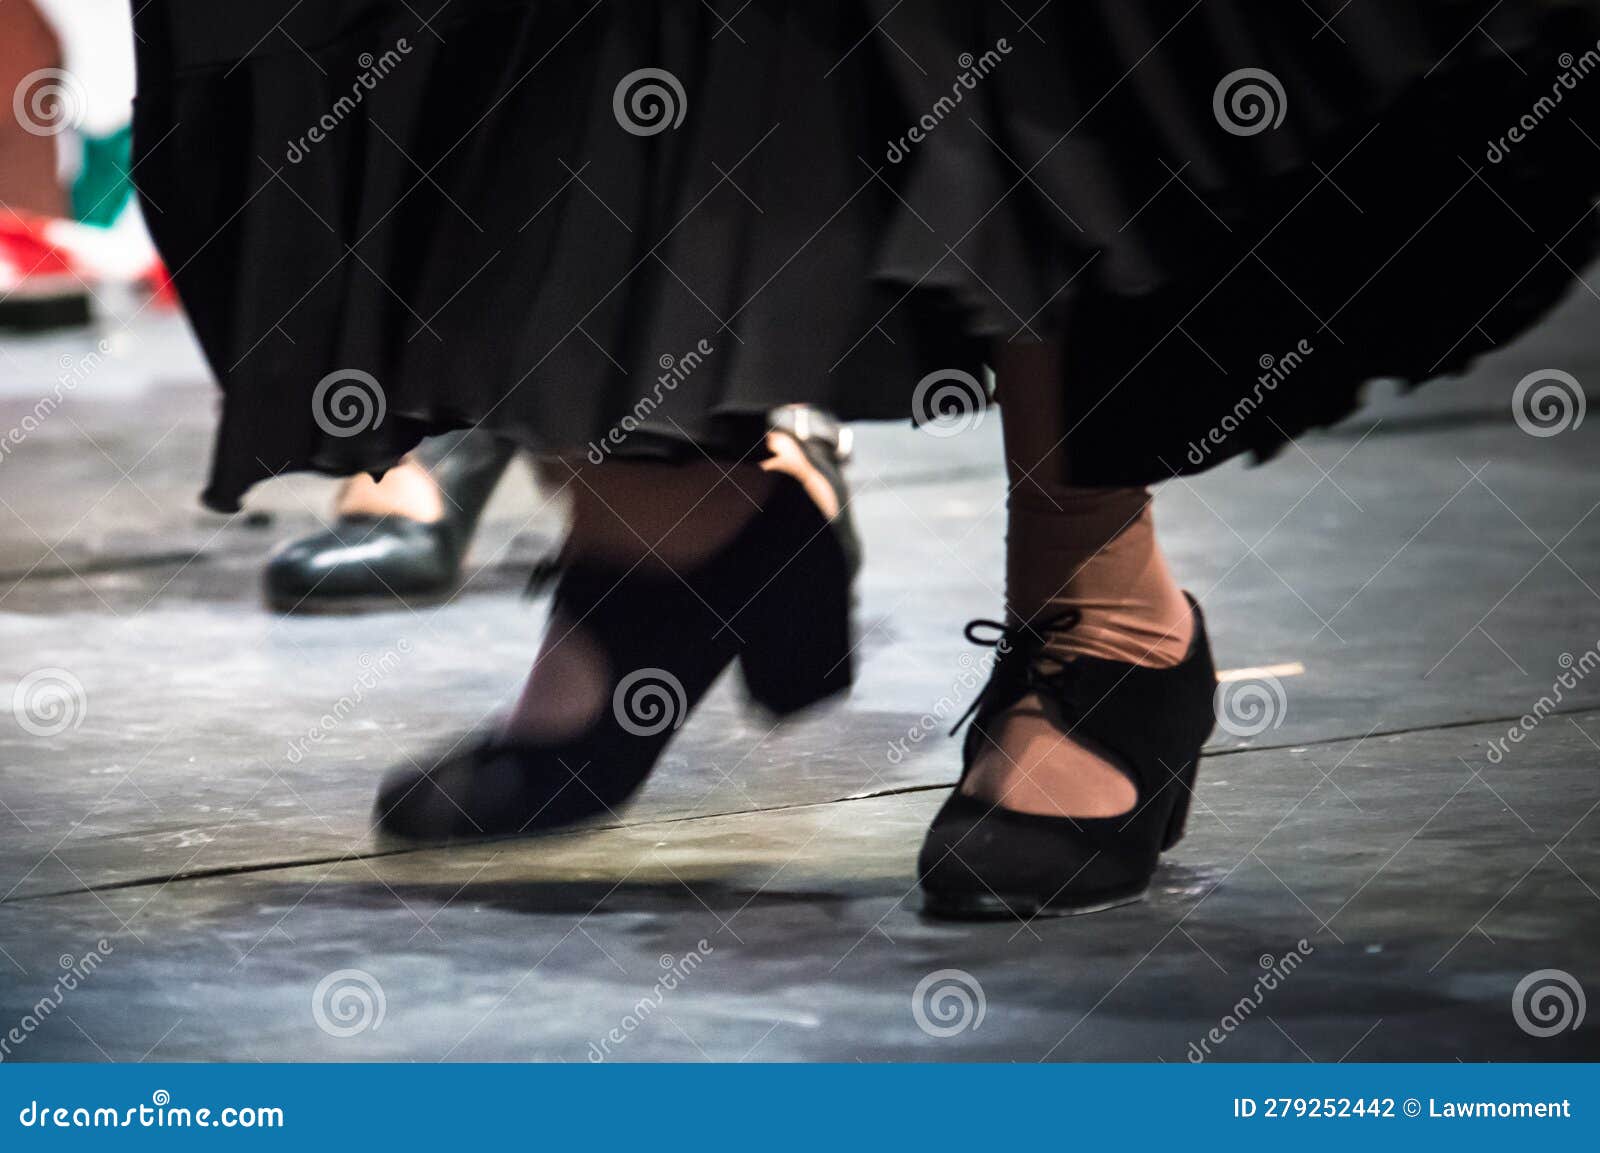 close up shoes of a dancer during the flamenco tree el ÃÂ¡rbol del flamenco musical show part of the flamenco festival (